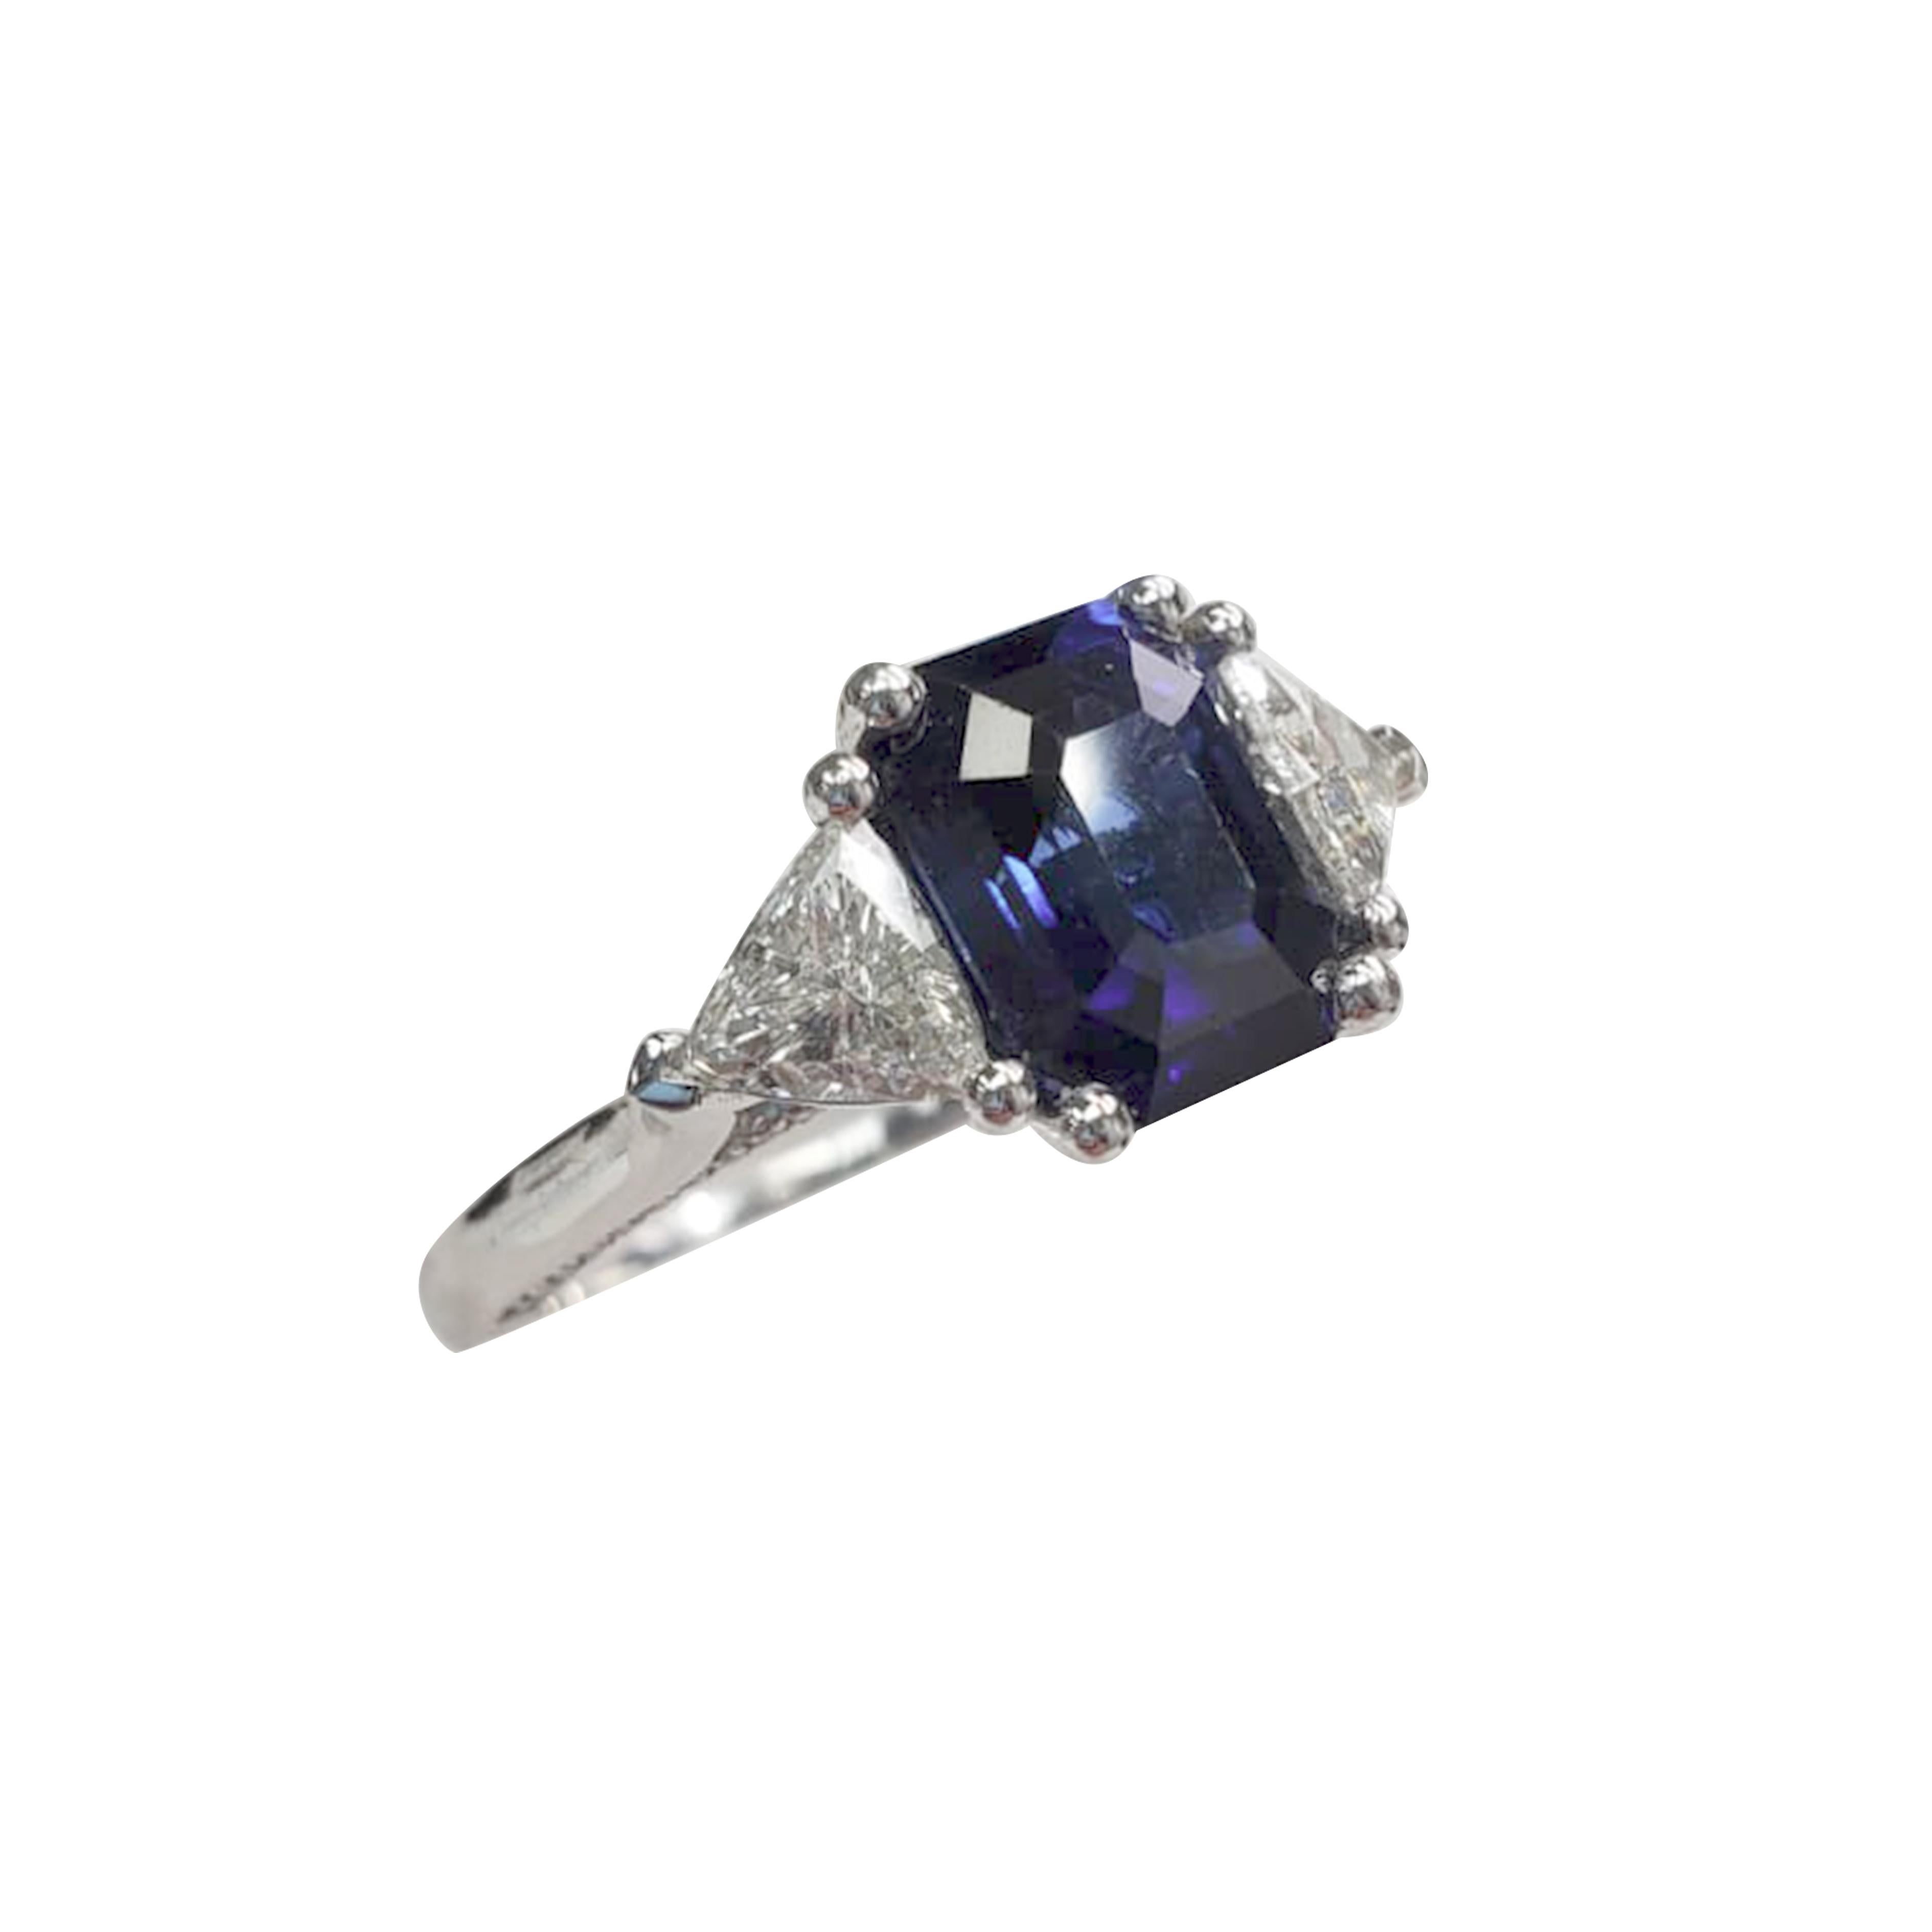 Emerald Cut Sapphire - 4.49ct
Diamond - 1.01ct
Platinum Ring

GIA CERTIFIED.